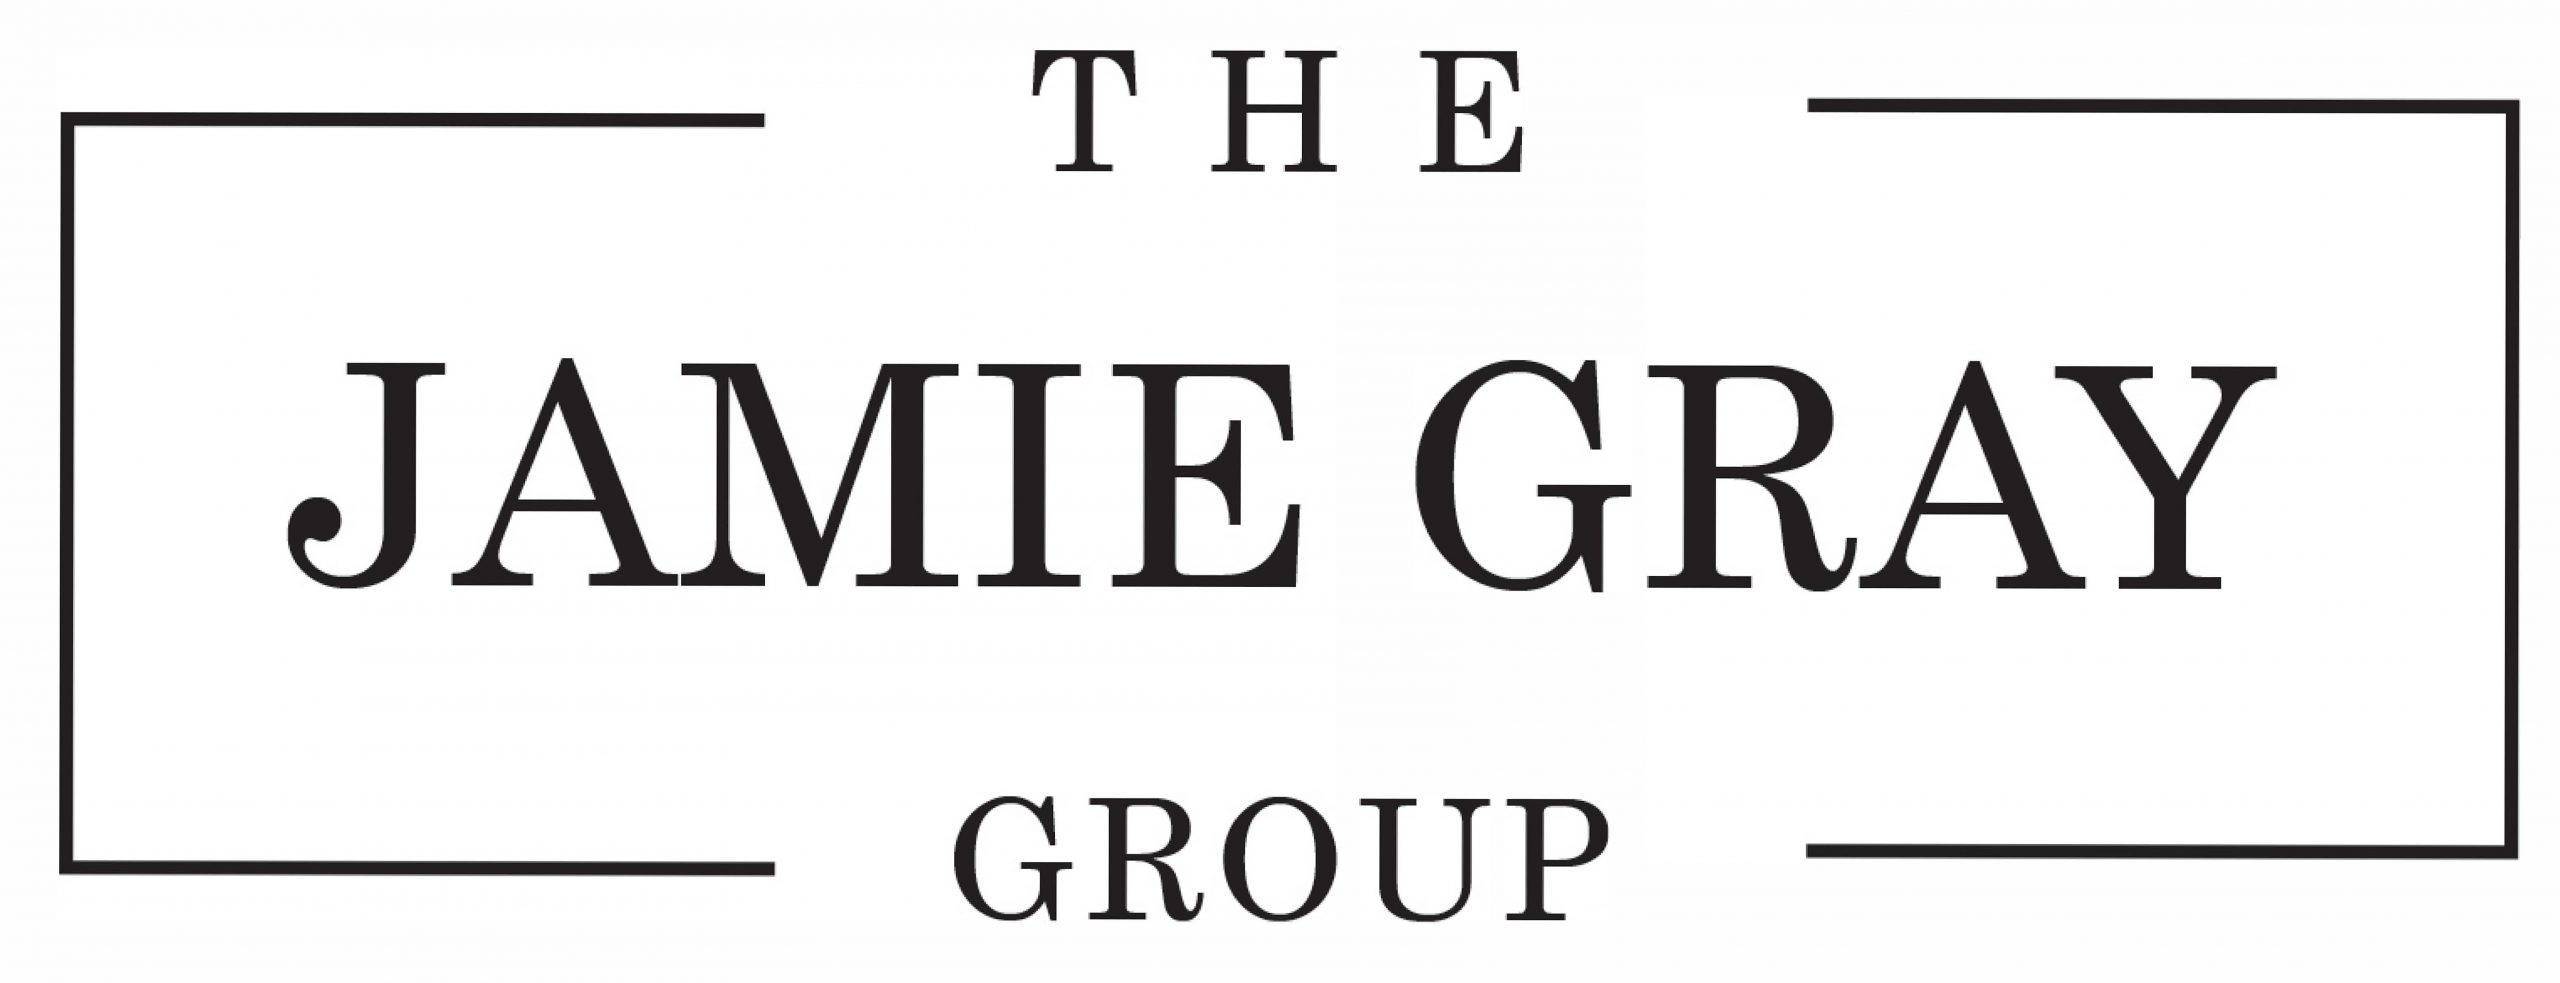 Final gray group logo_